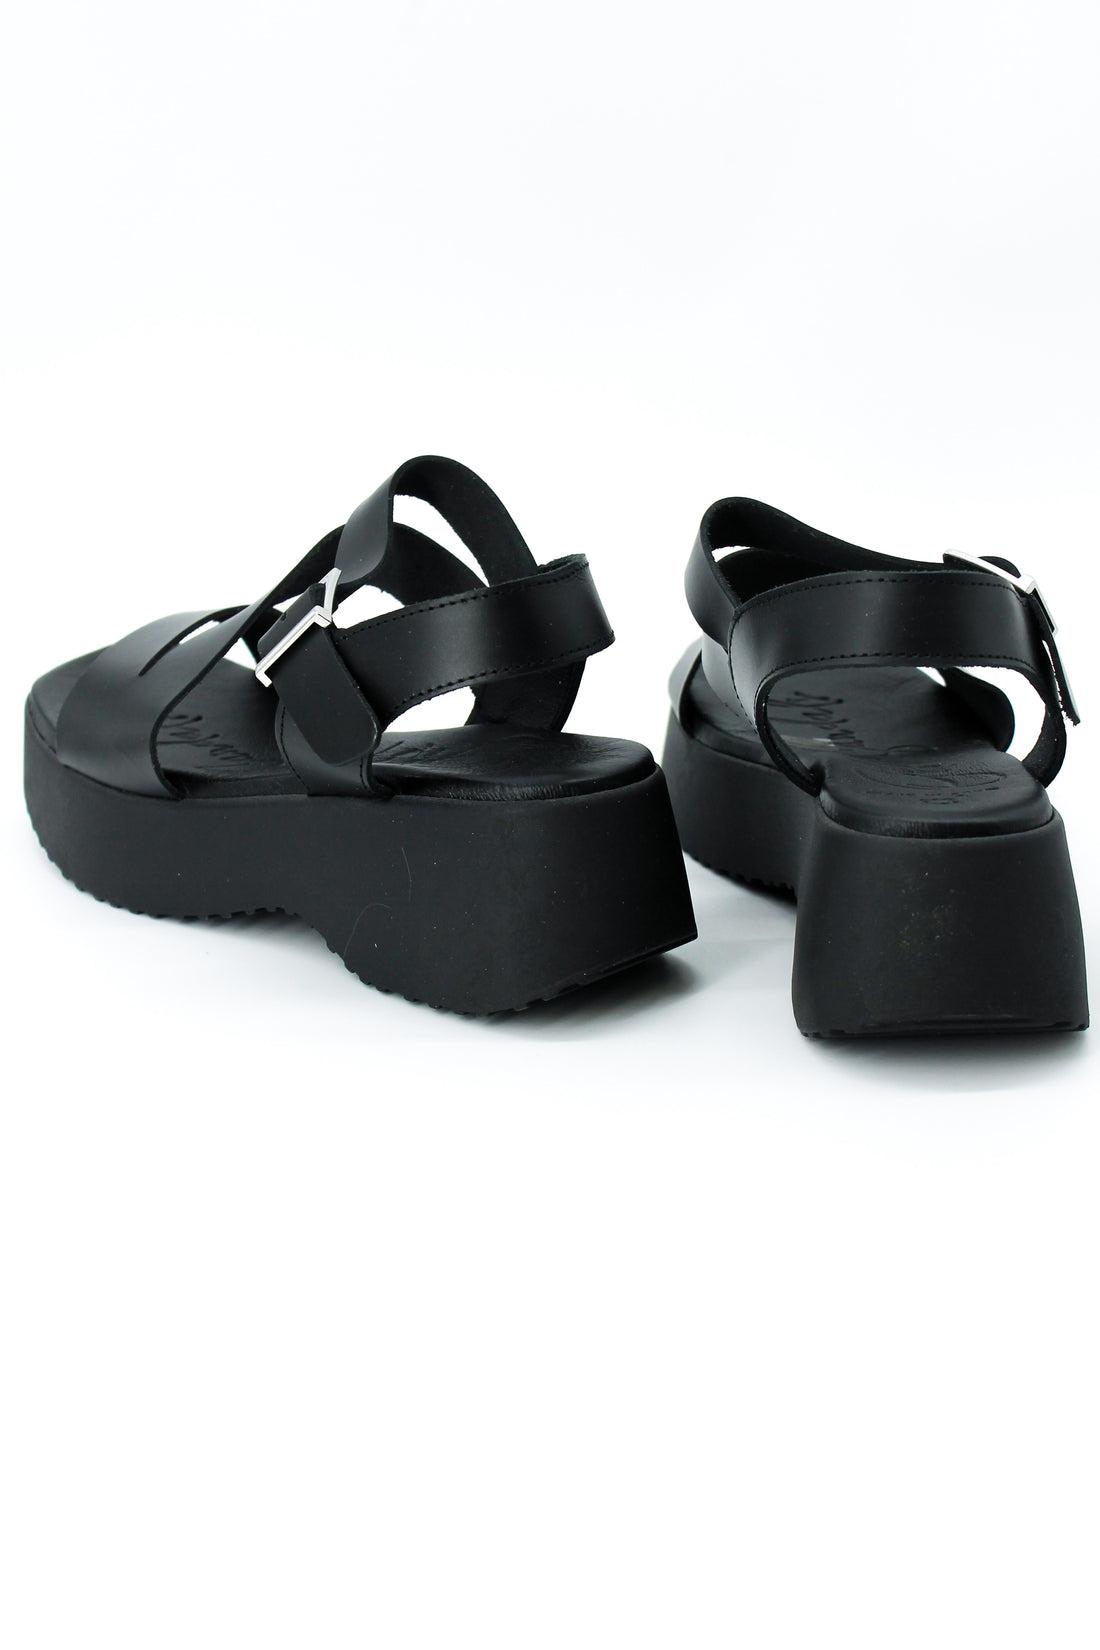 Oh My Sandals 5196 Black